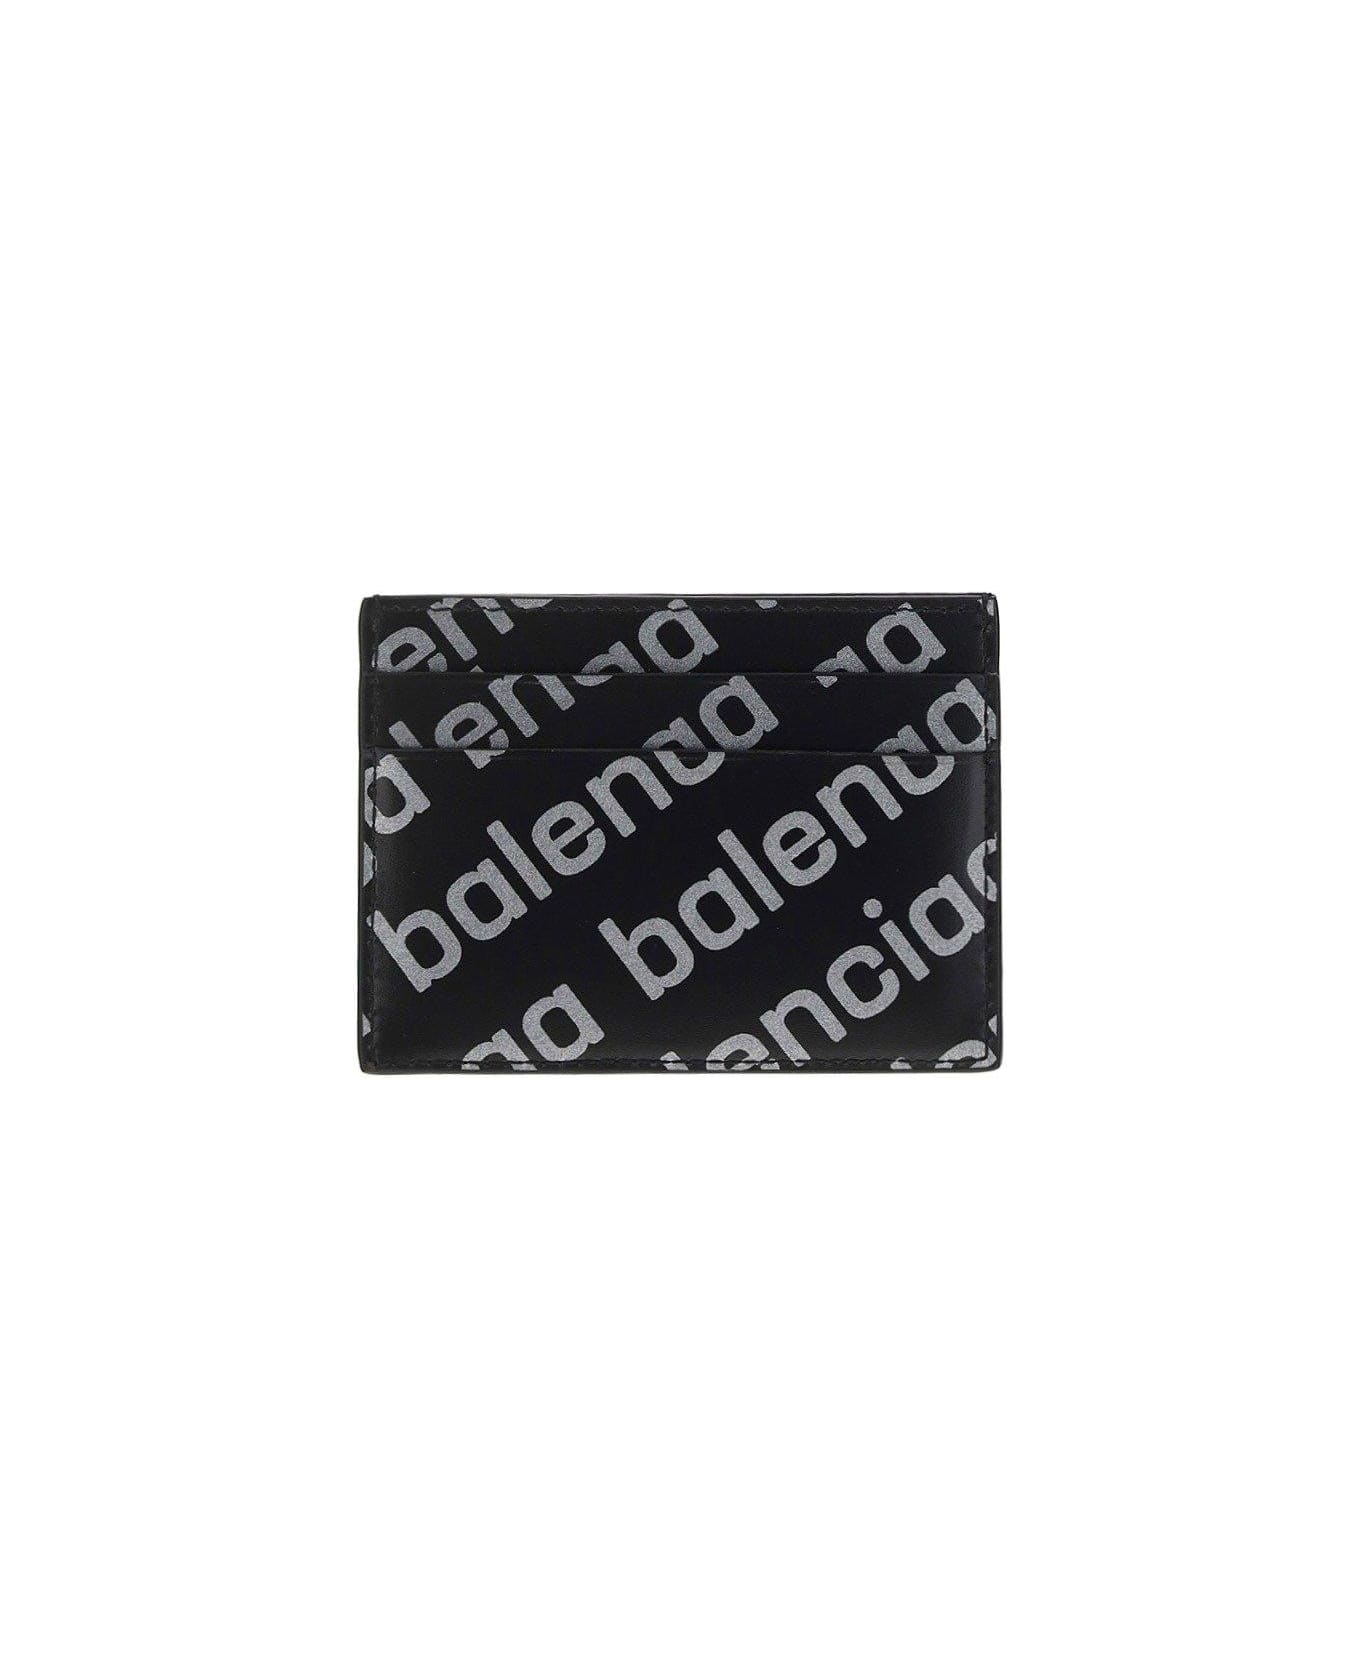 Balenciaga Reflective Printed Cash Card Holder - BLACK